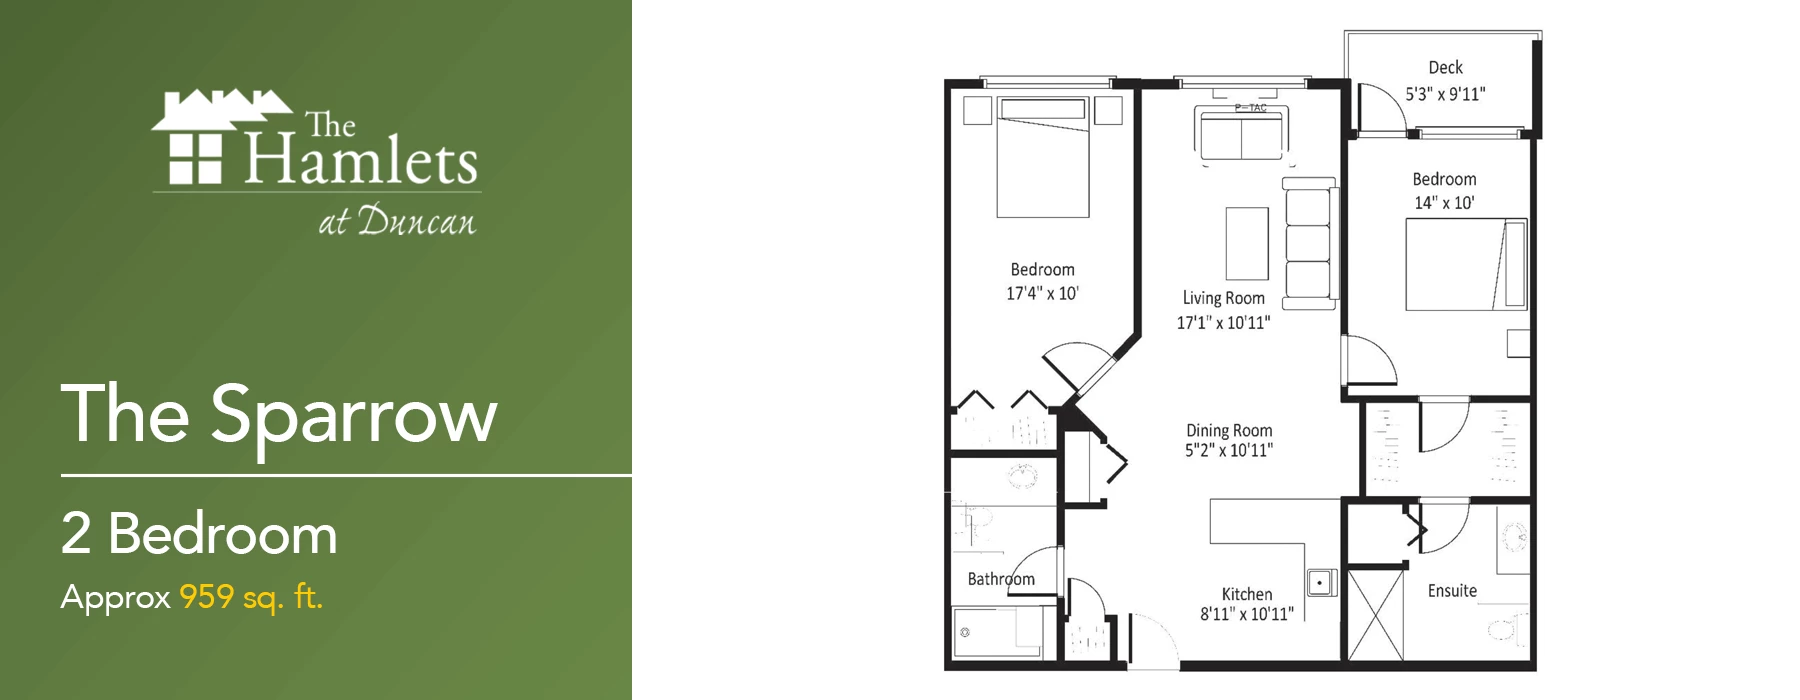 The Sparrow Plan- 2 Bedroom senior apartment